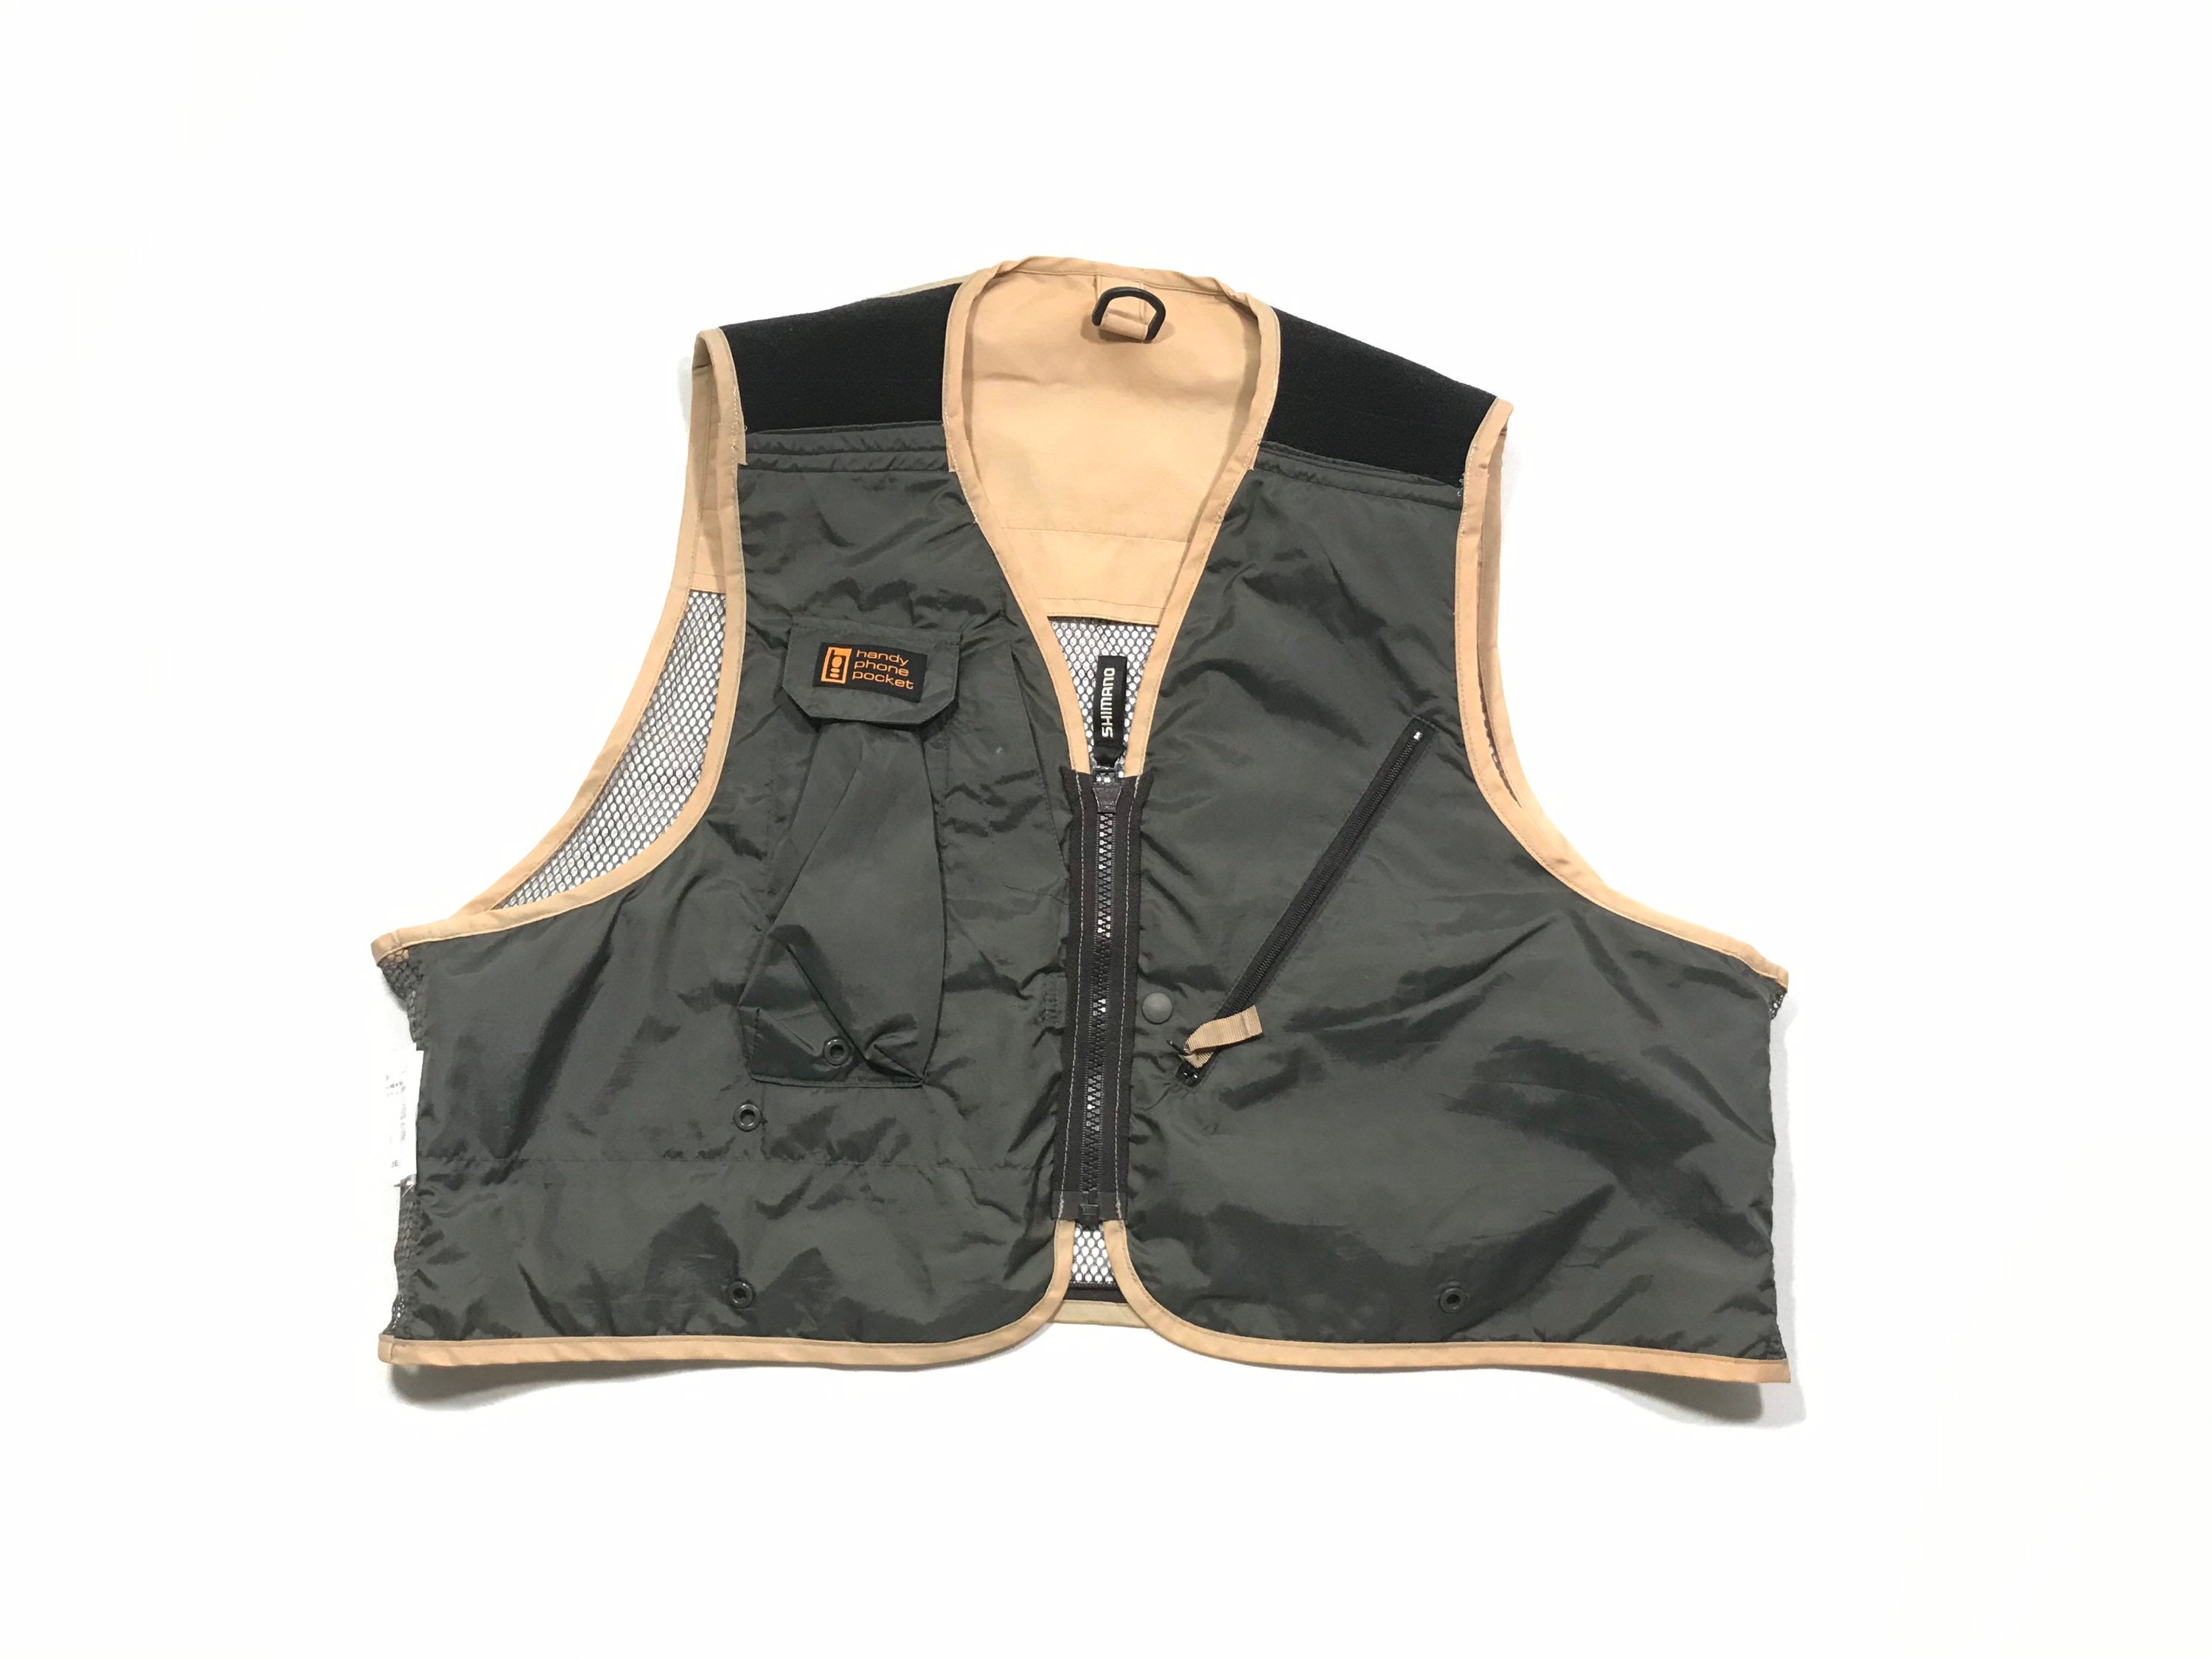 SHIMANO NEXUS Hyper Fishing Gear Hunting Vest Jacket Sz Large